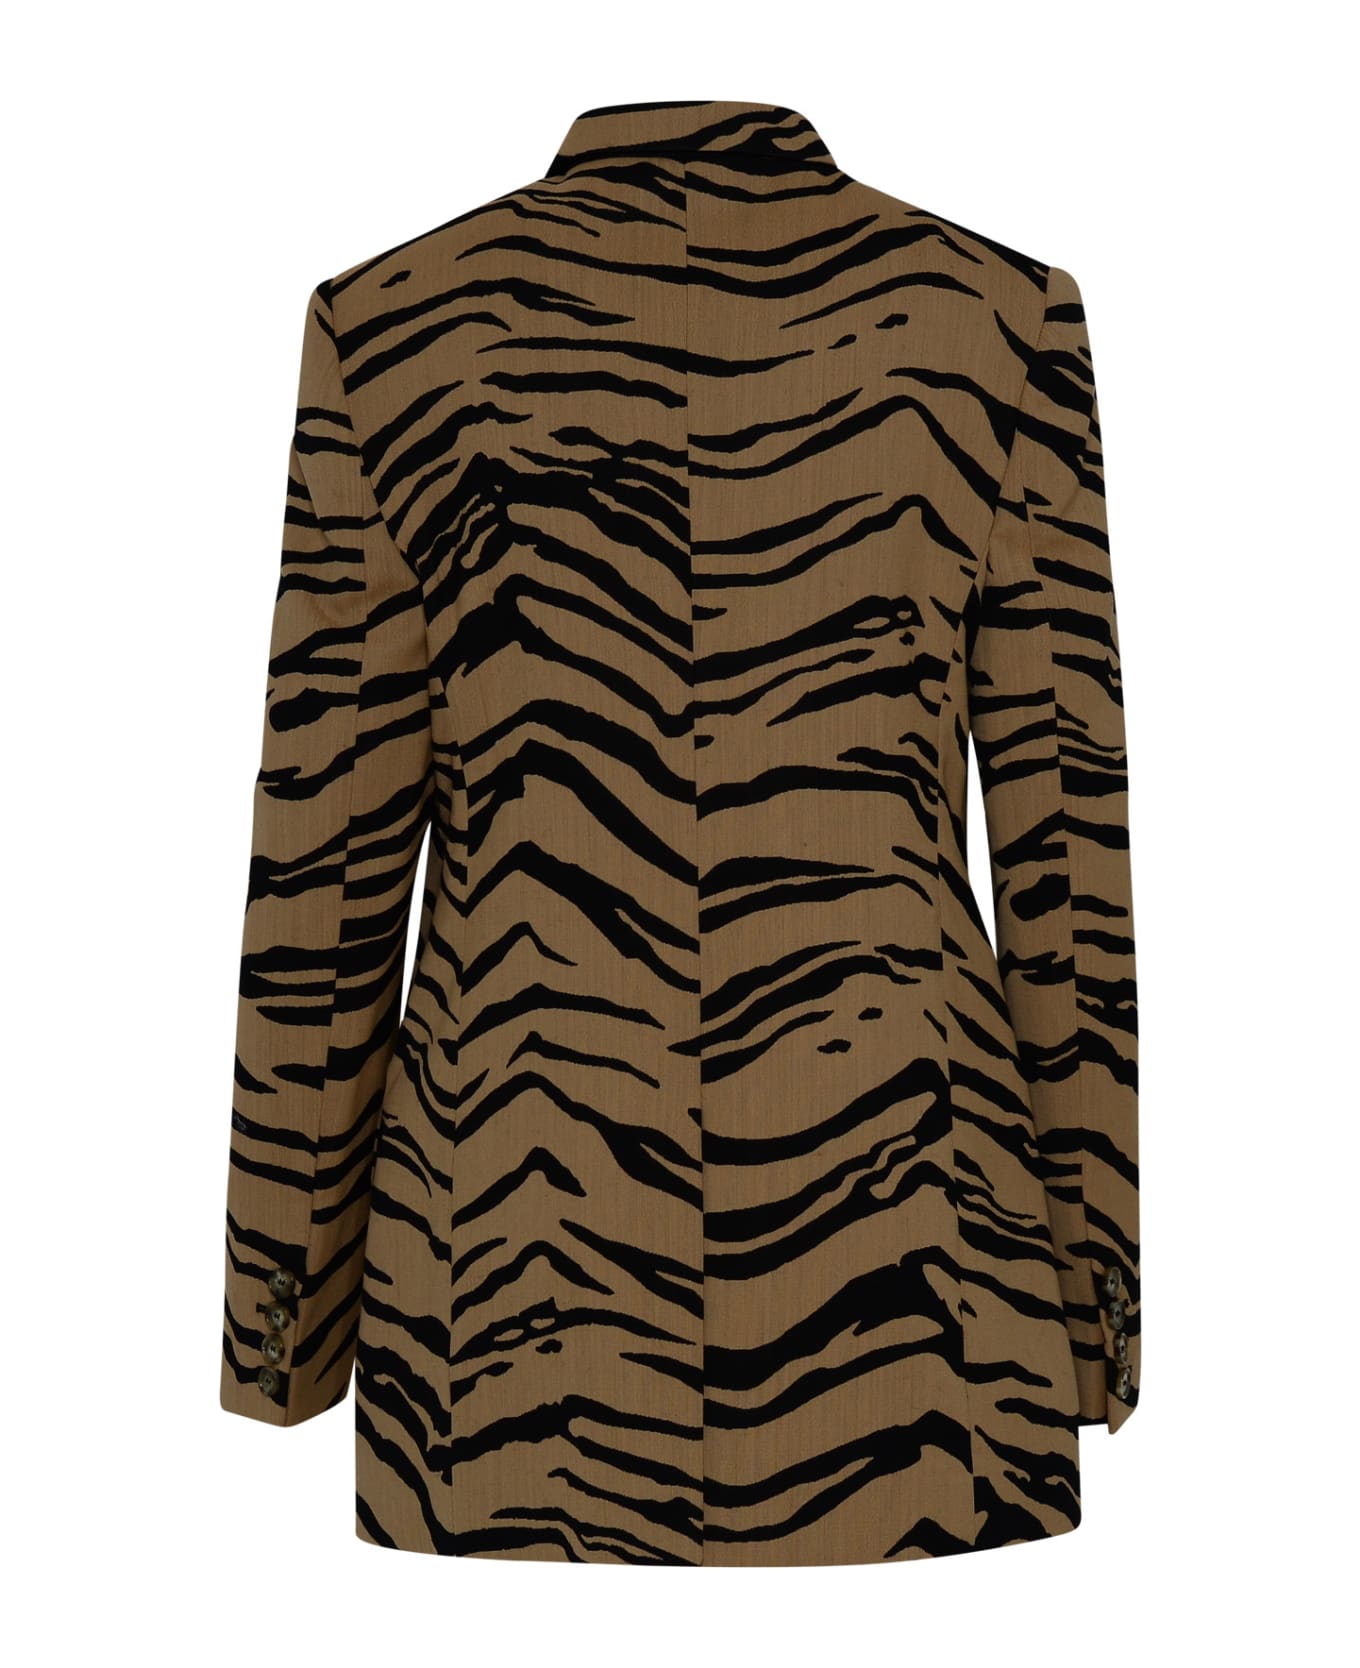 Stella McCartney Tiger Wool Blend Blazer Jacket - BROWN